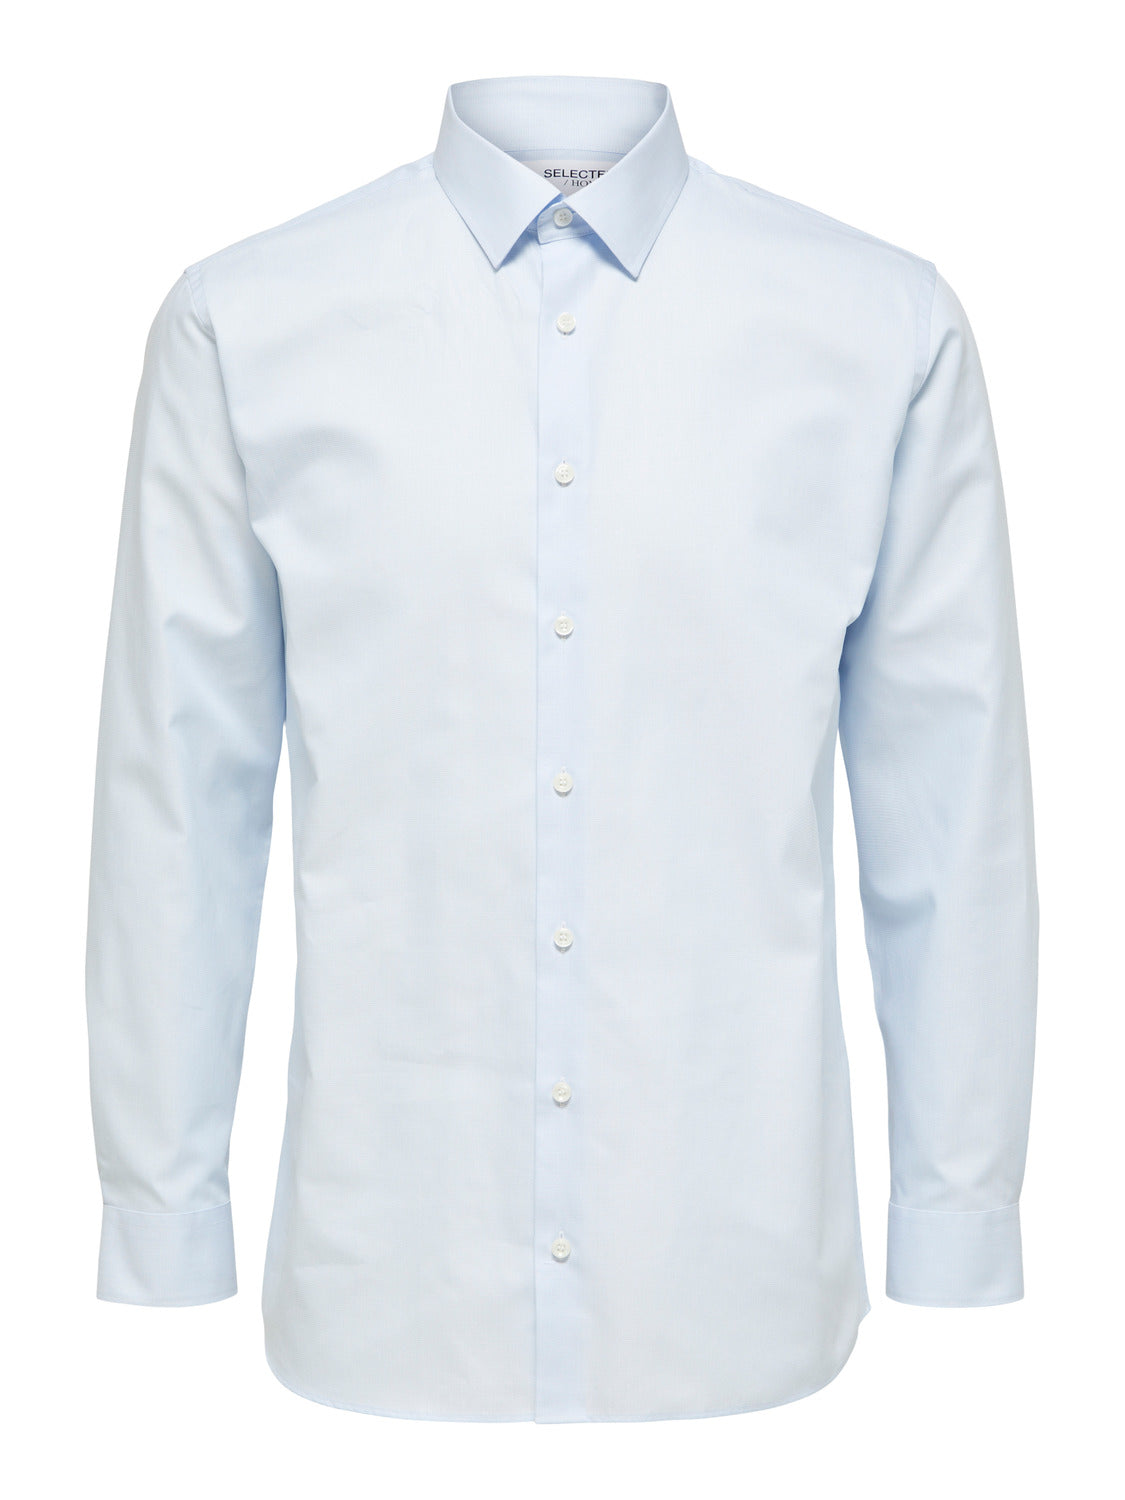 SELECTED HOMME - REG ETHAN Shirts - Light Blue